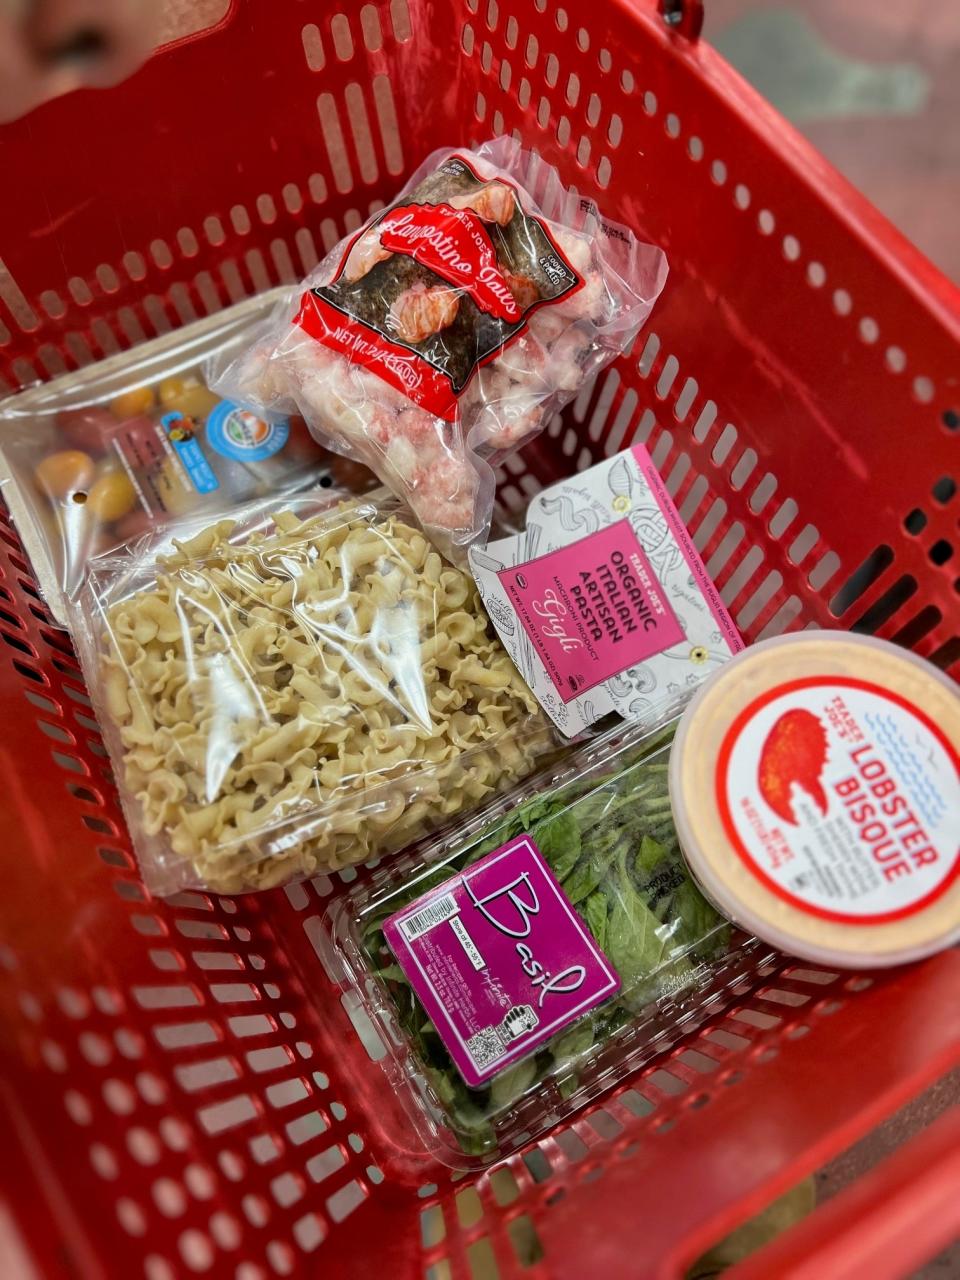 A basket containing Trader Joe's ingredients